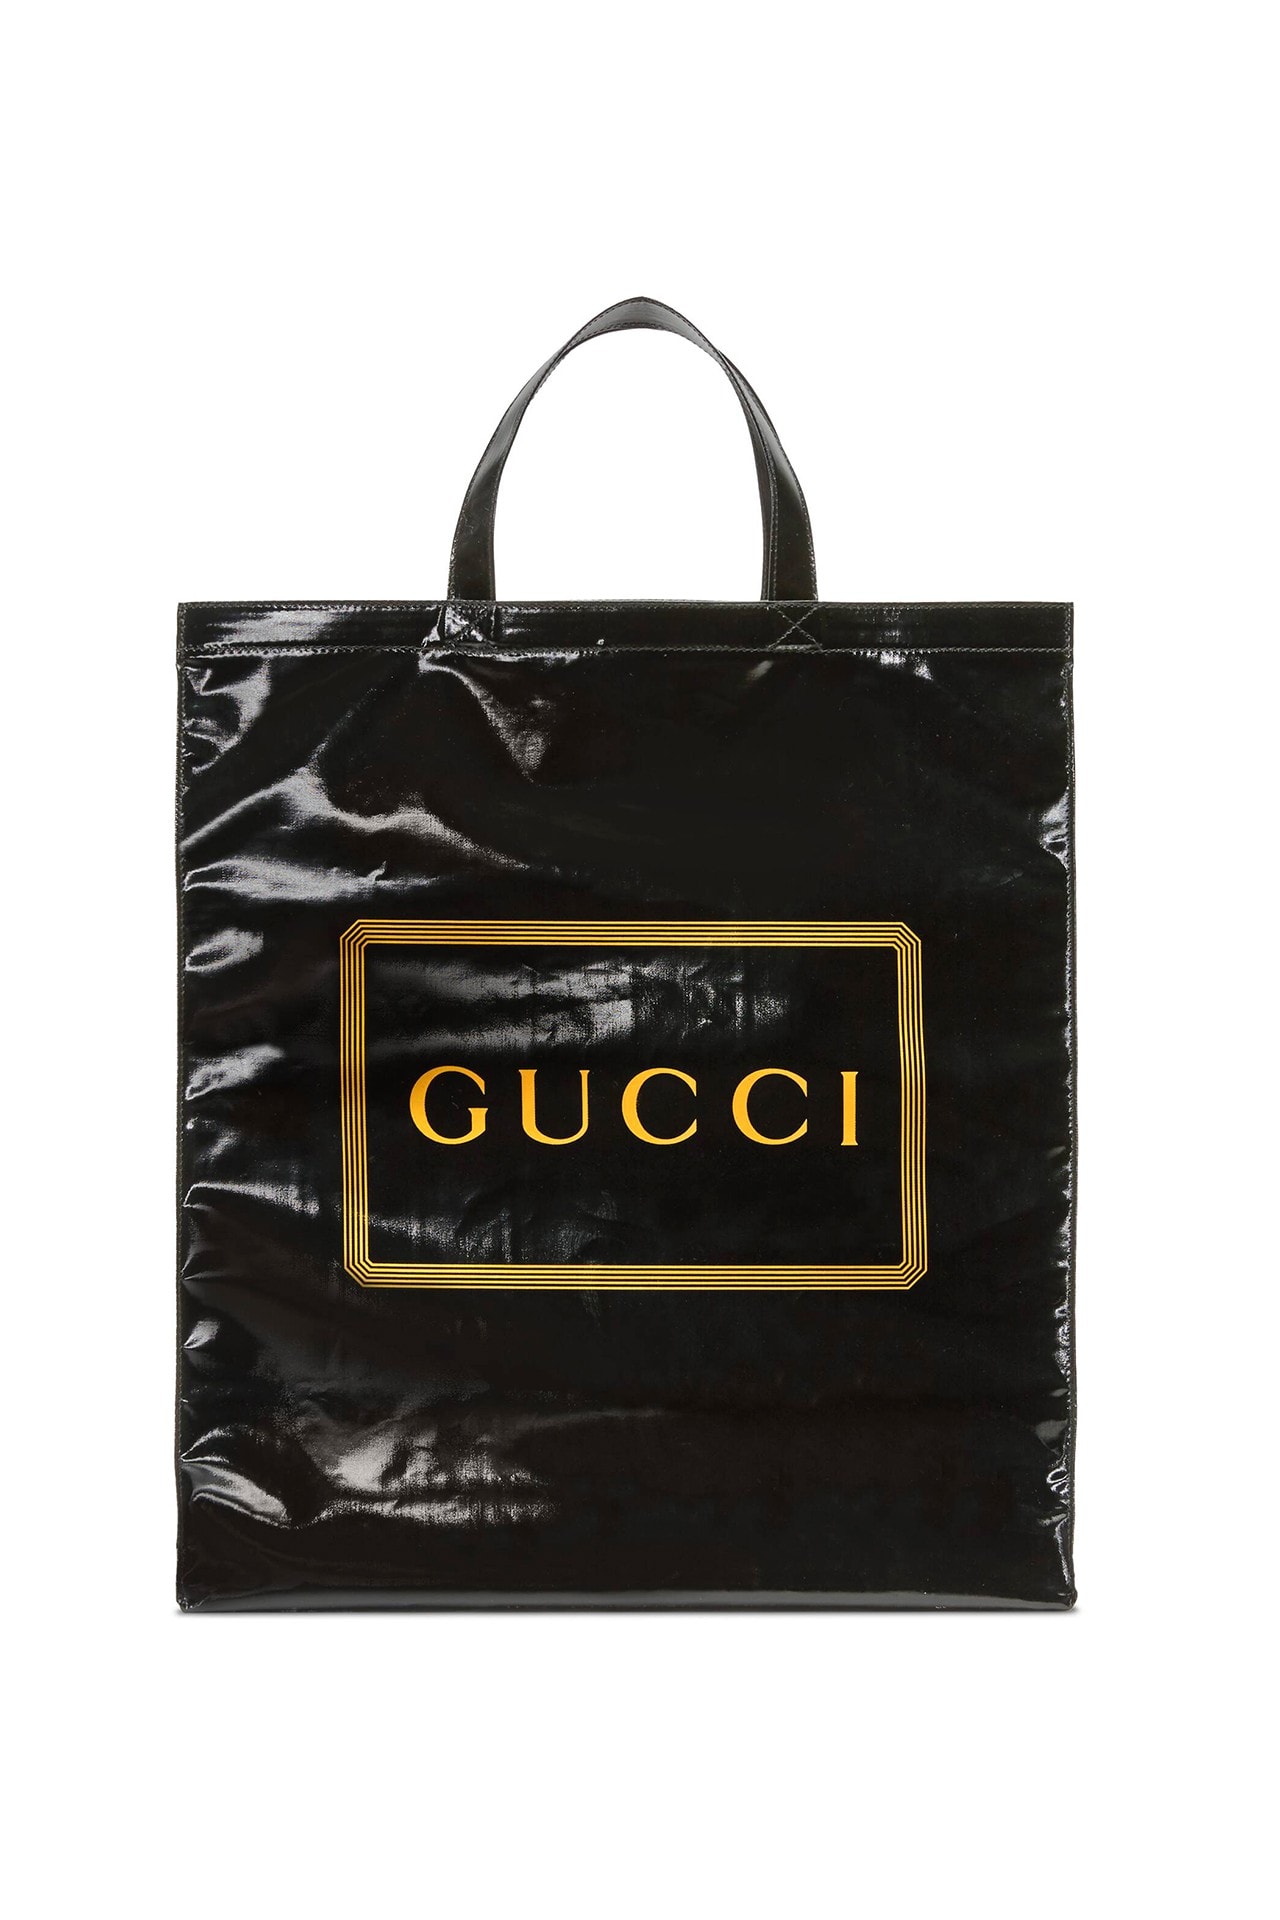 Gucci 2019 早秋系列 Tote Bag 正式開放預訂